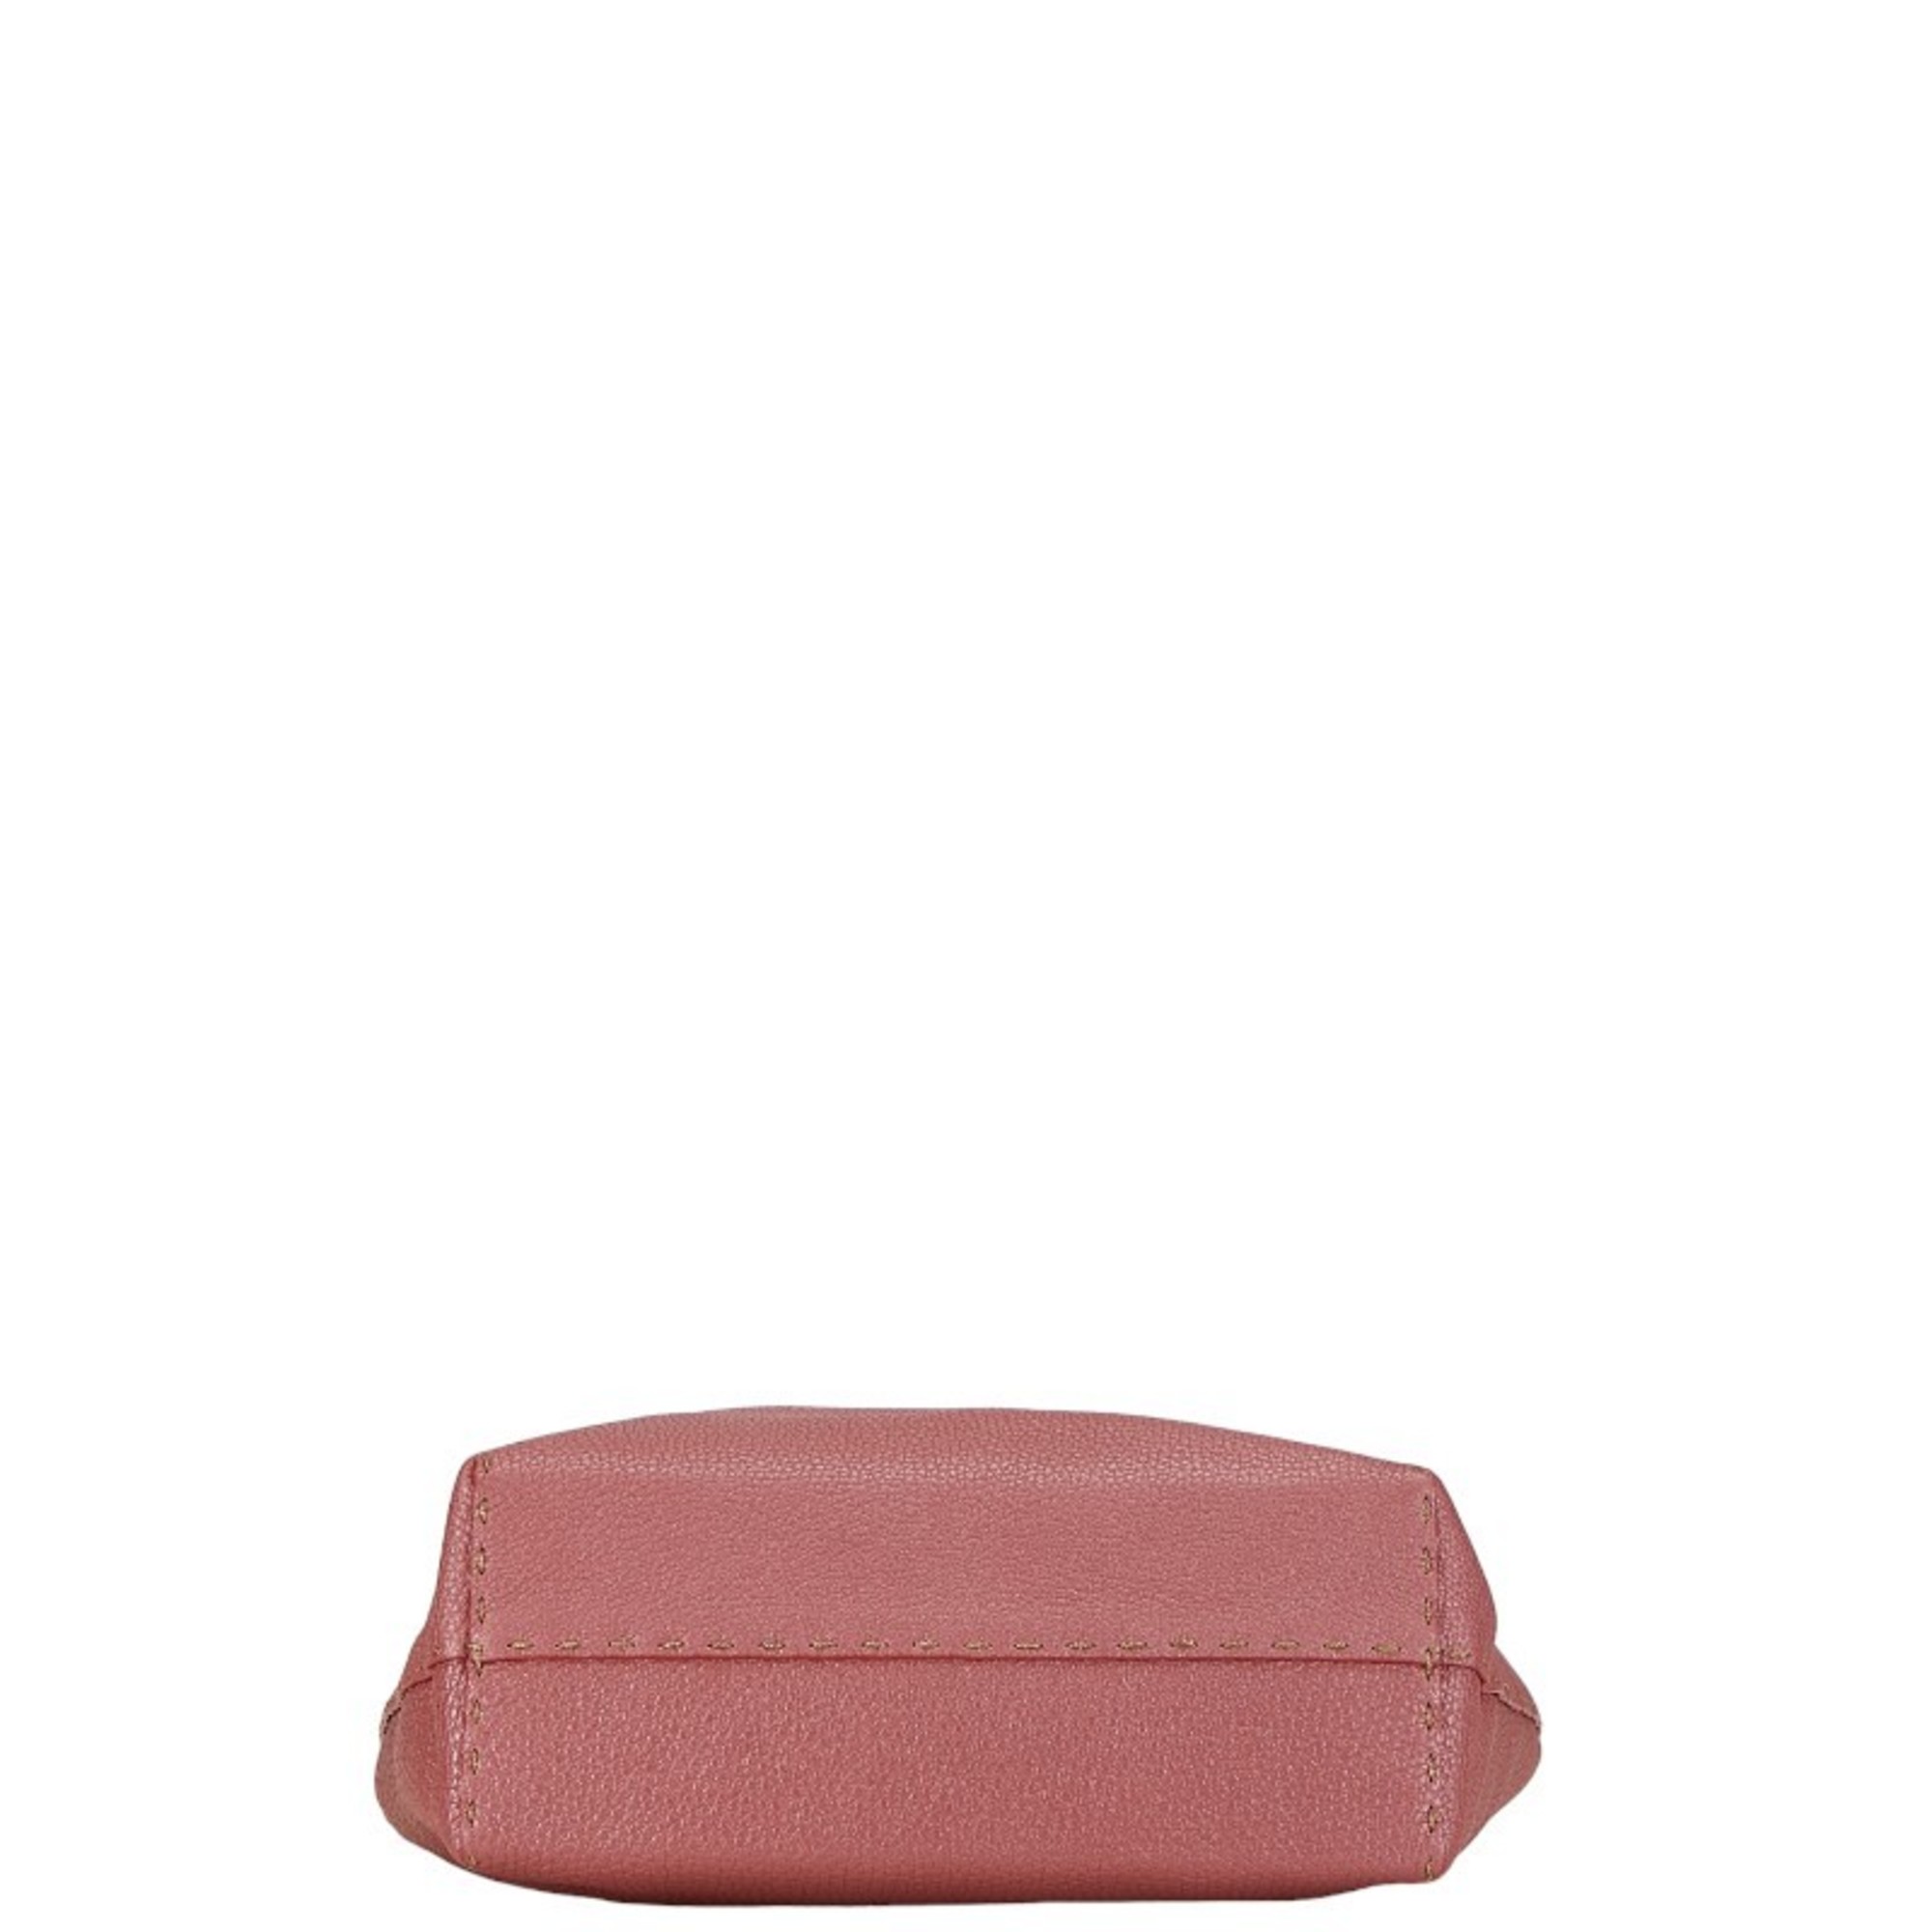 FENDI Selleria Tote Bag Handbag 8BH099 Pink Leather Women's